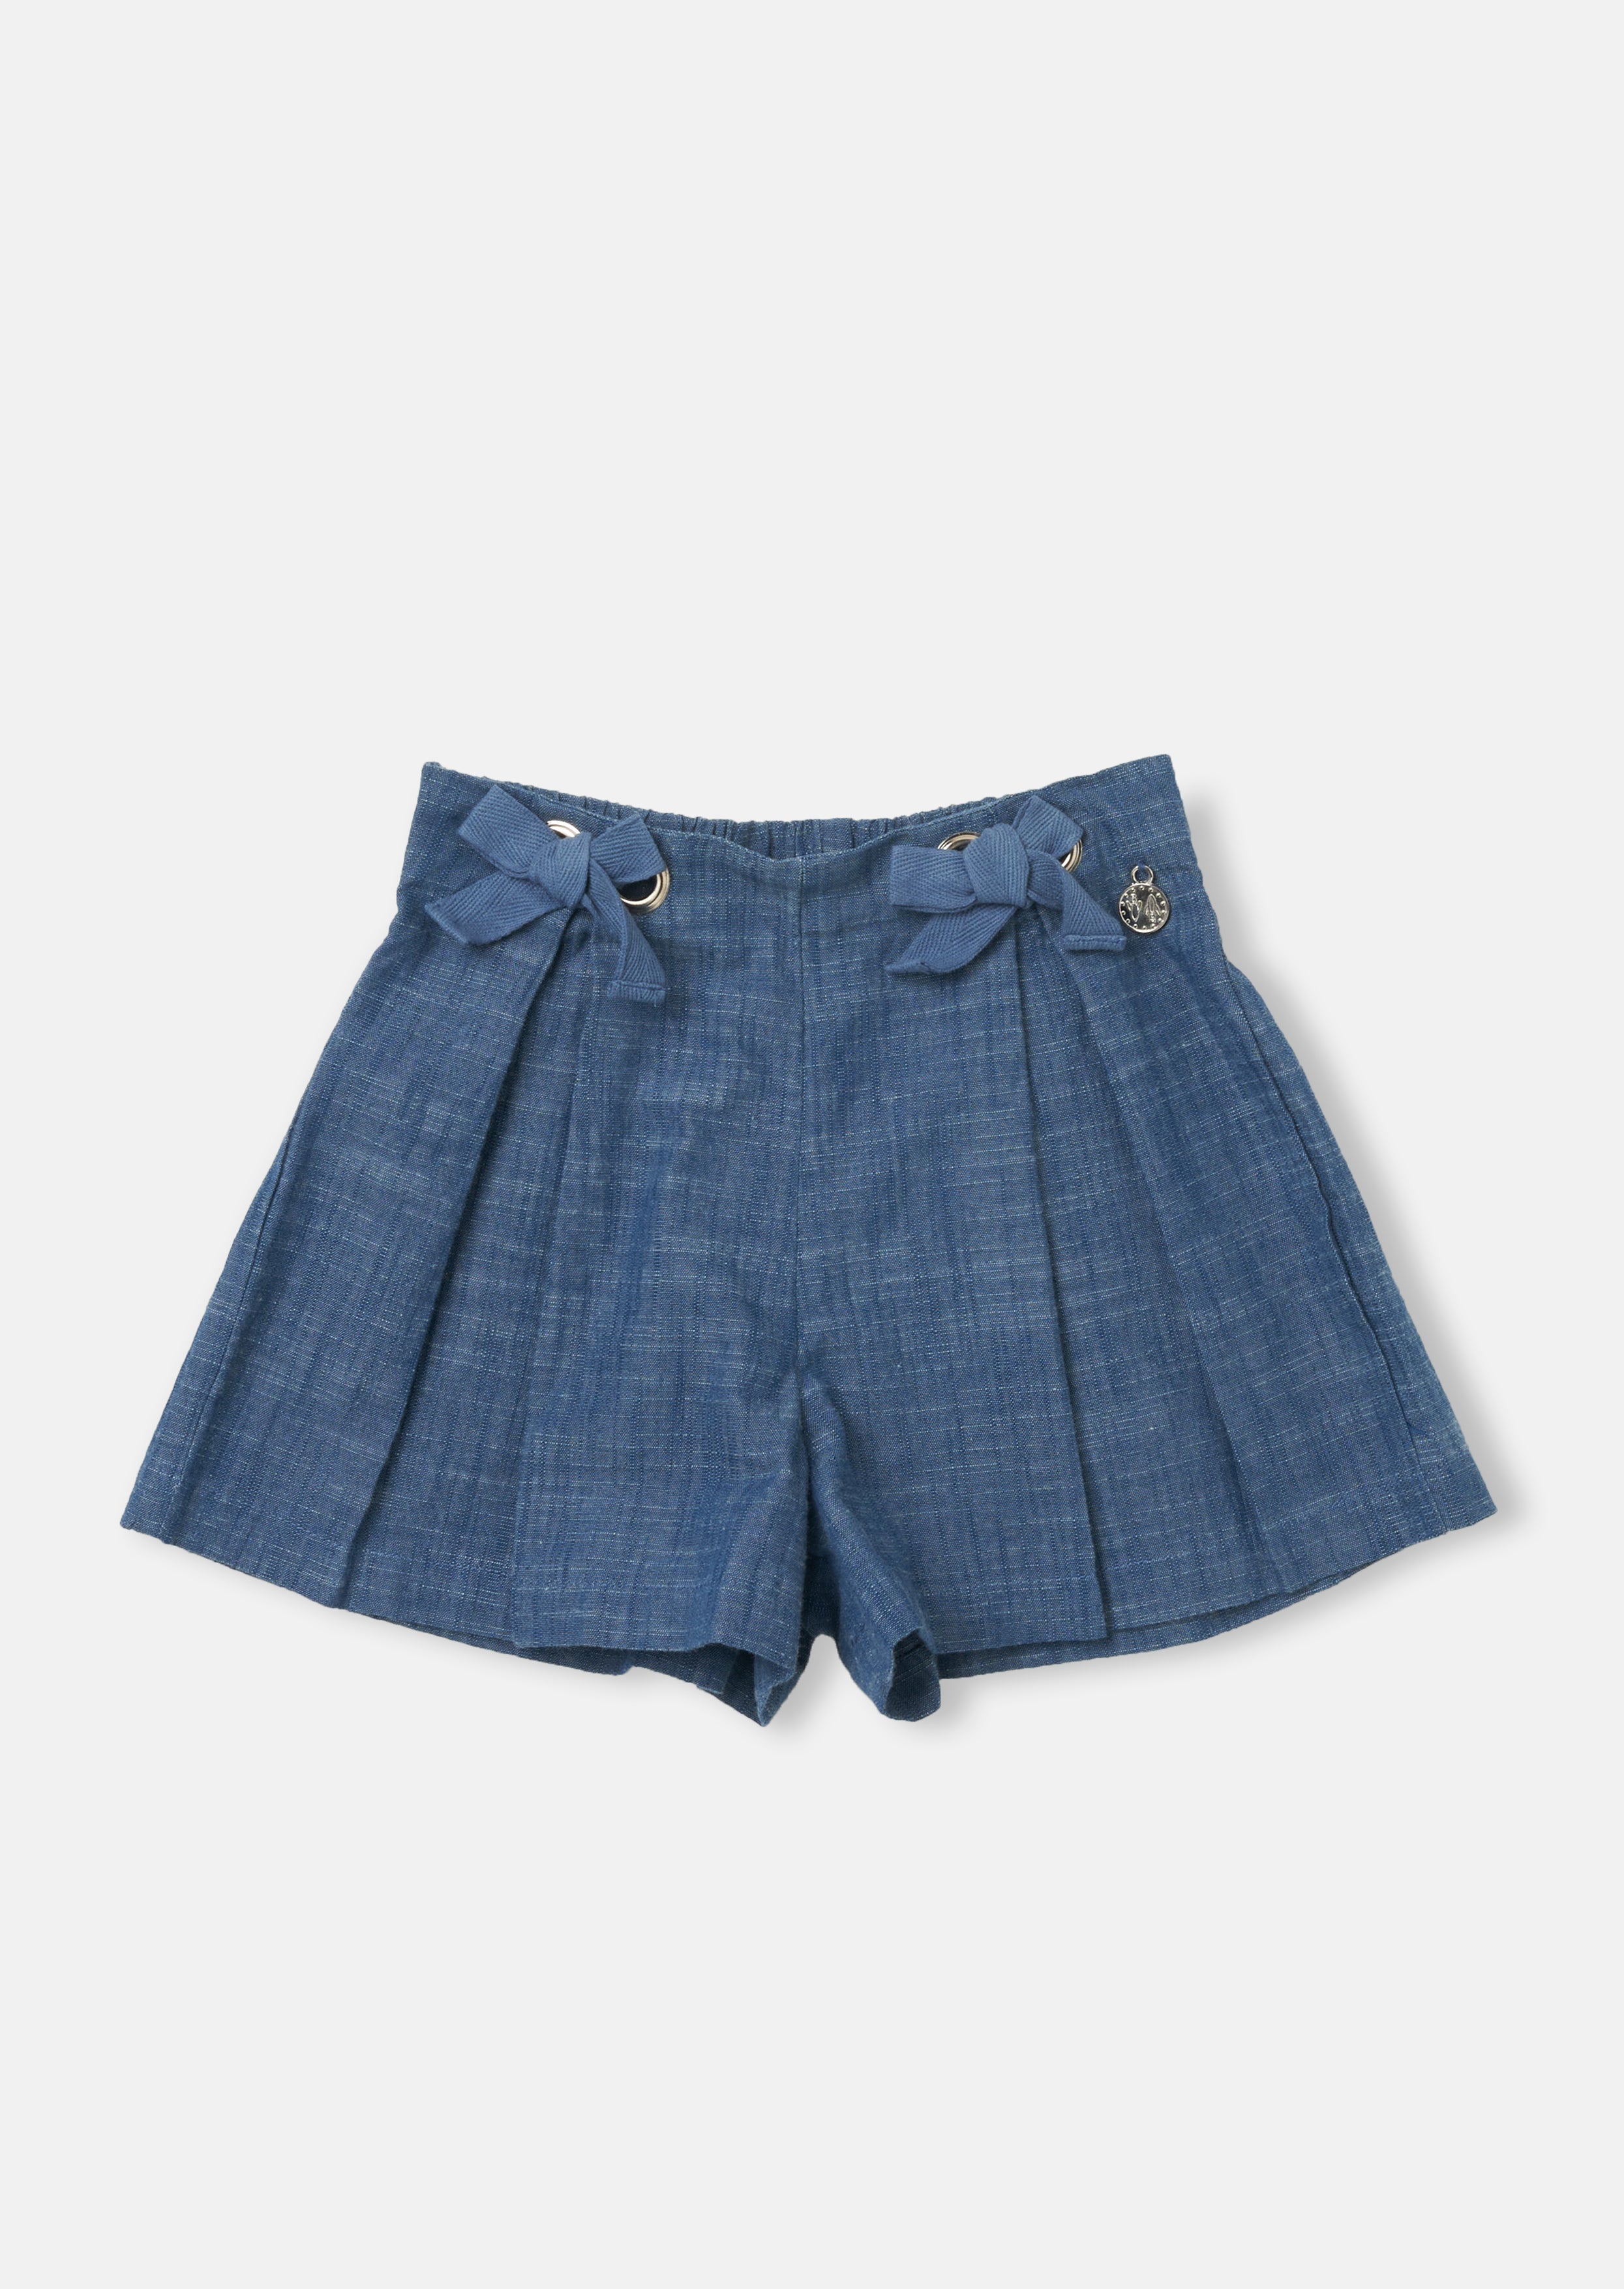 Girls Pleated Blue Denim Shorts